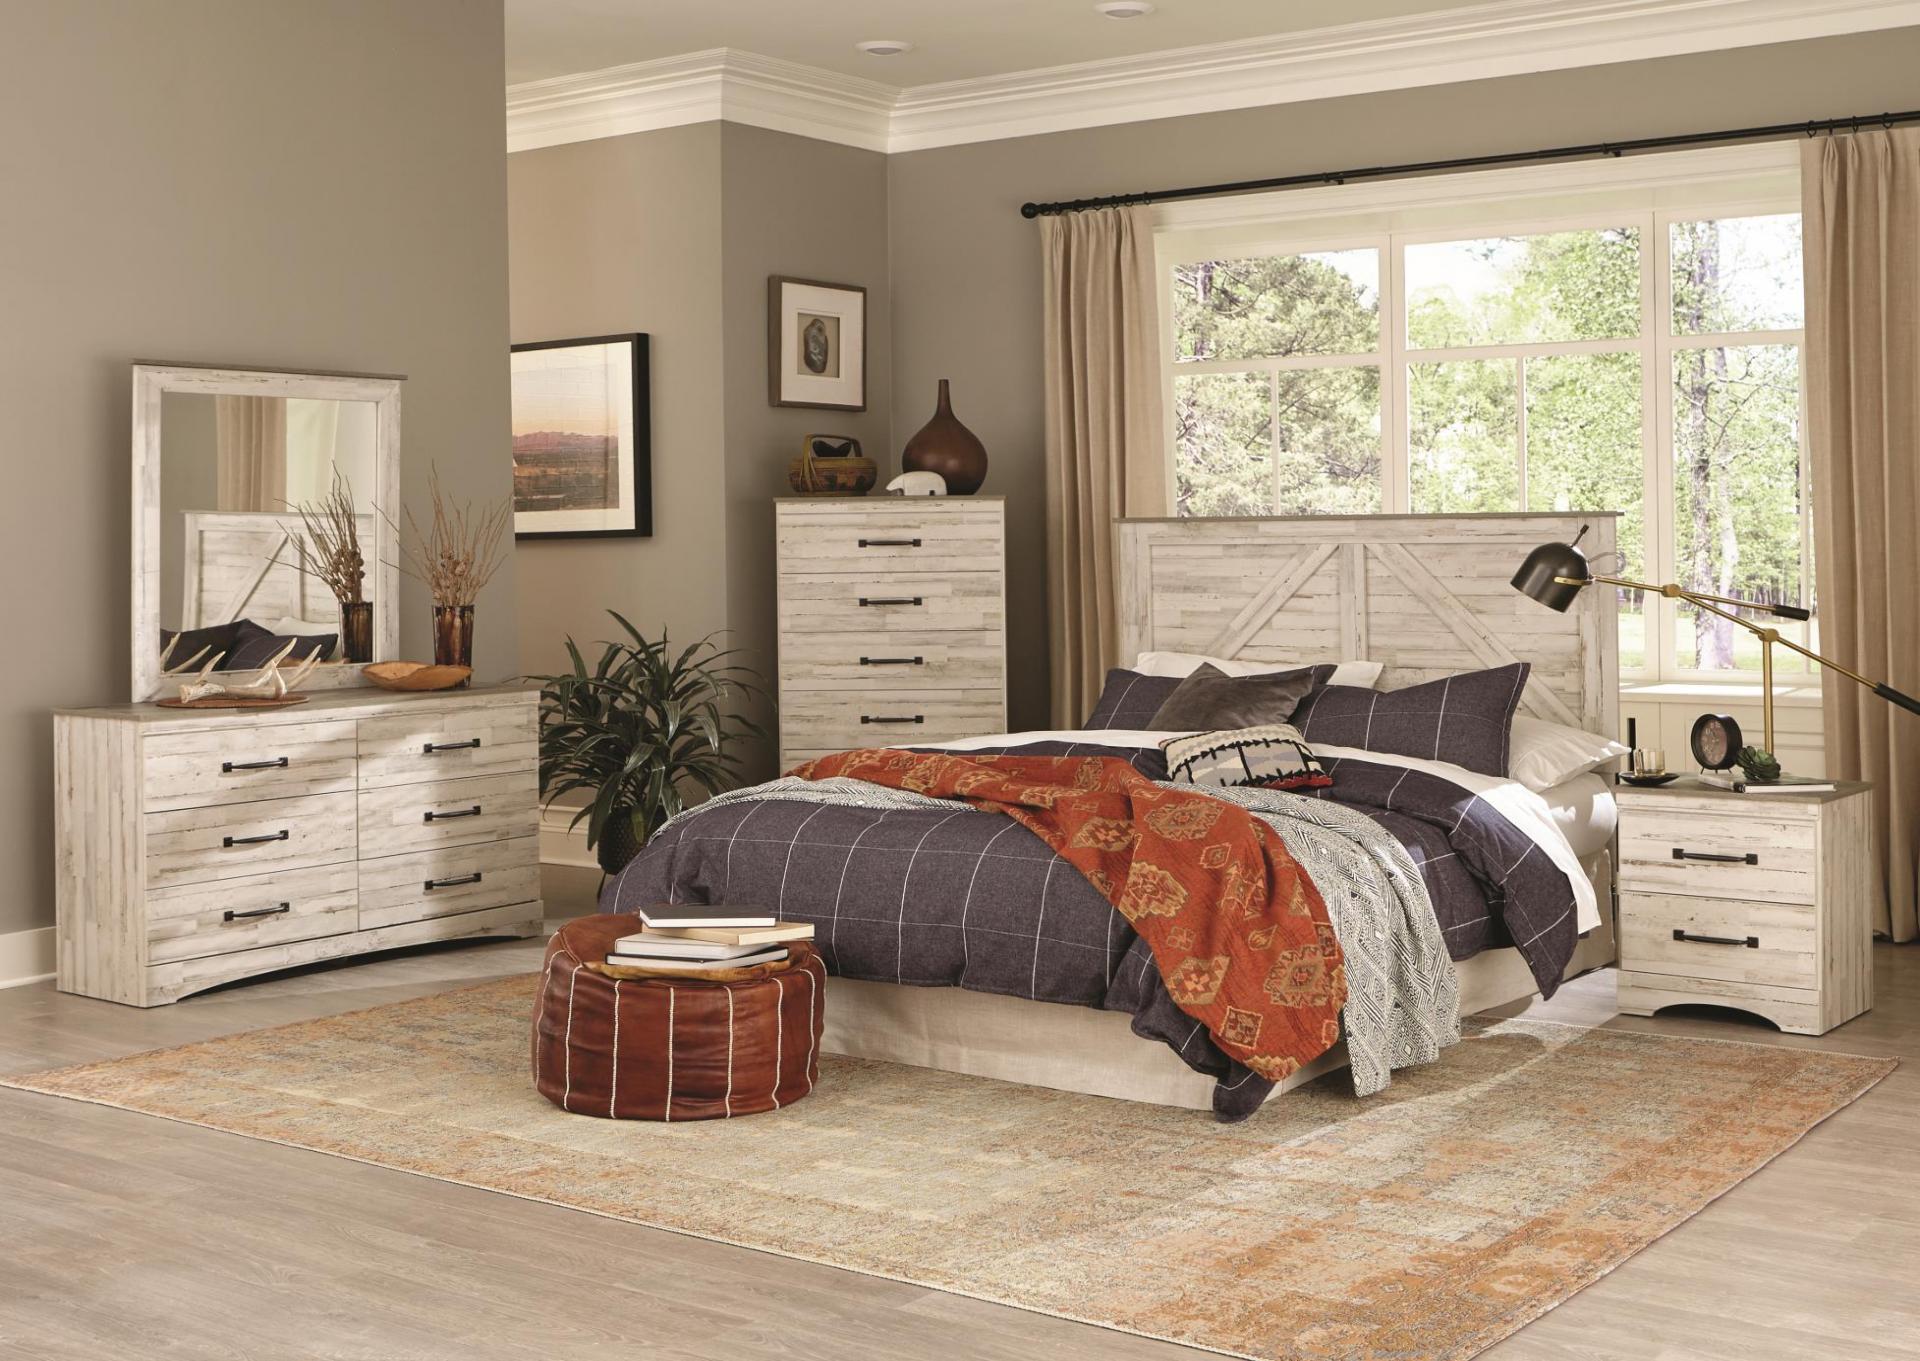 aspen home bedroom furniture reviews